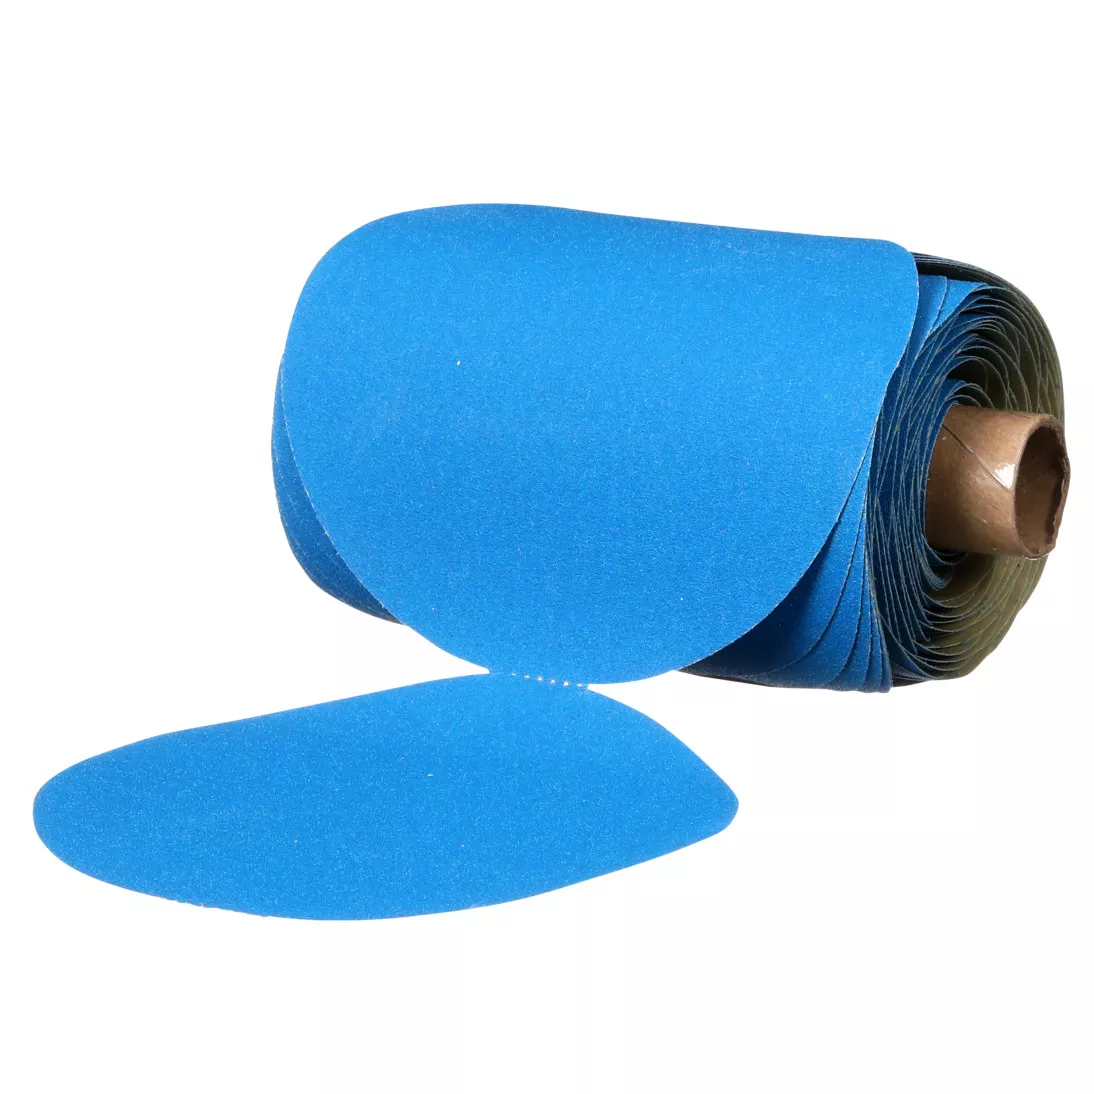 3M™ Stikit™ Blue Abrasive Disc Roll, 36266, 5 in, 120 grade, No Hole, 100 discs per roll, 5 rolls per case